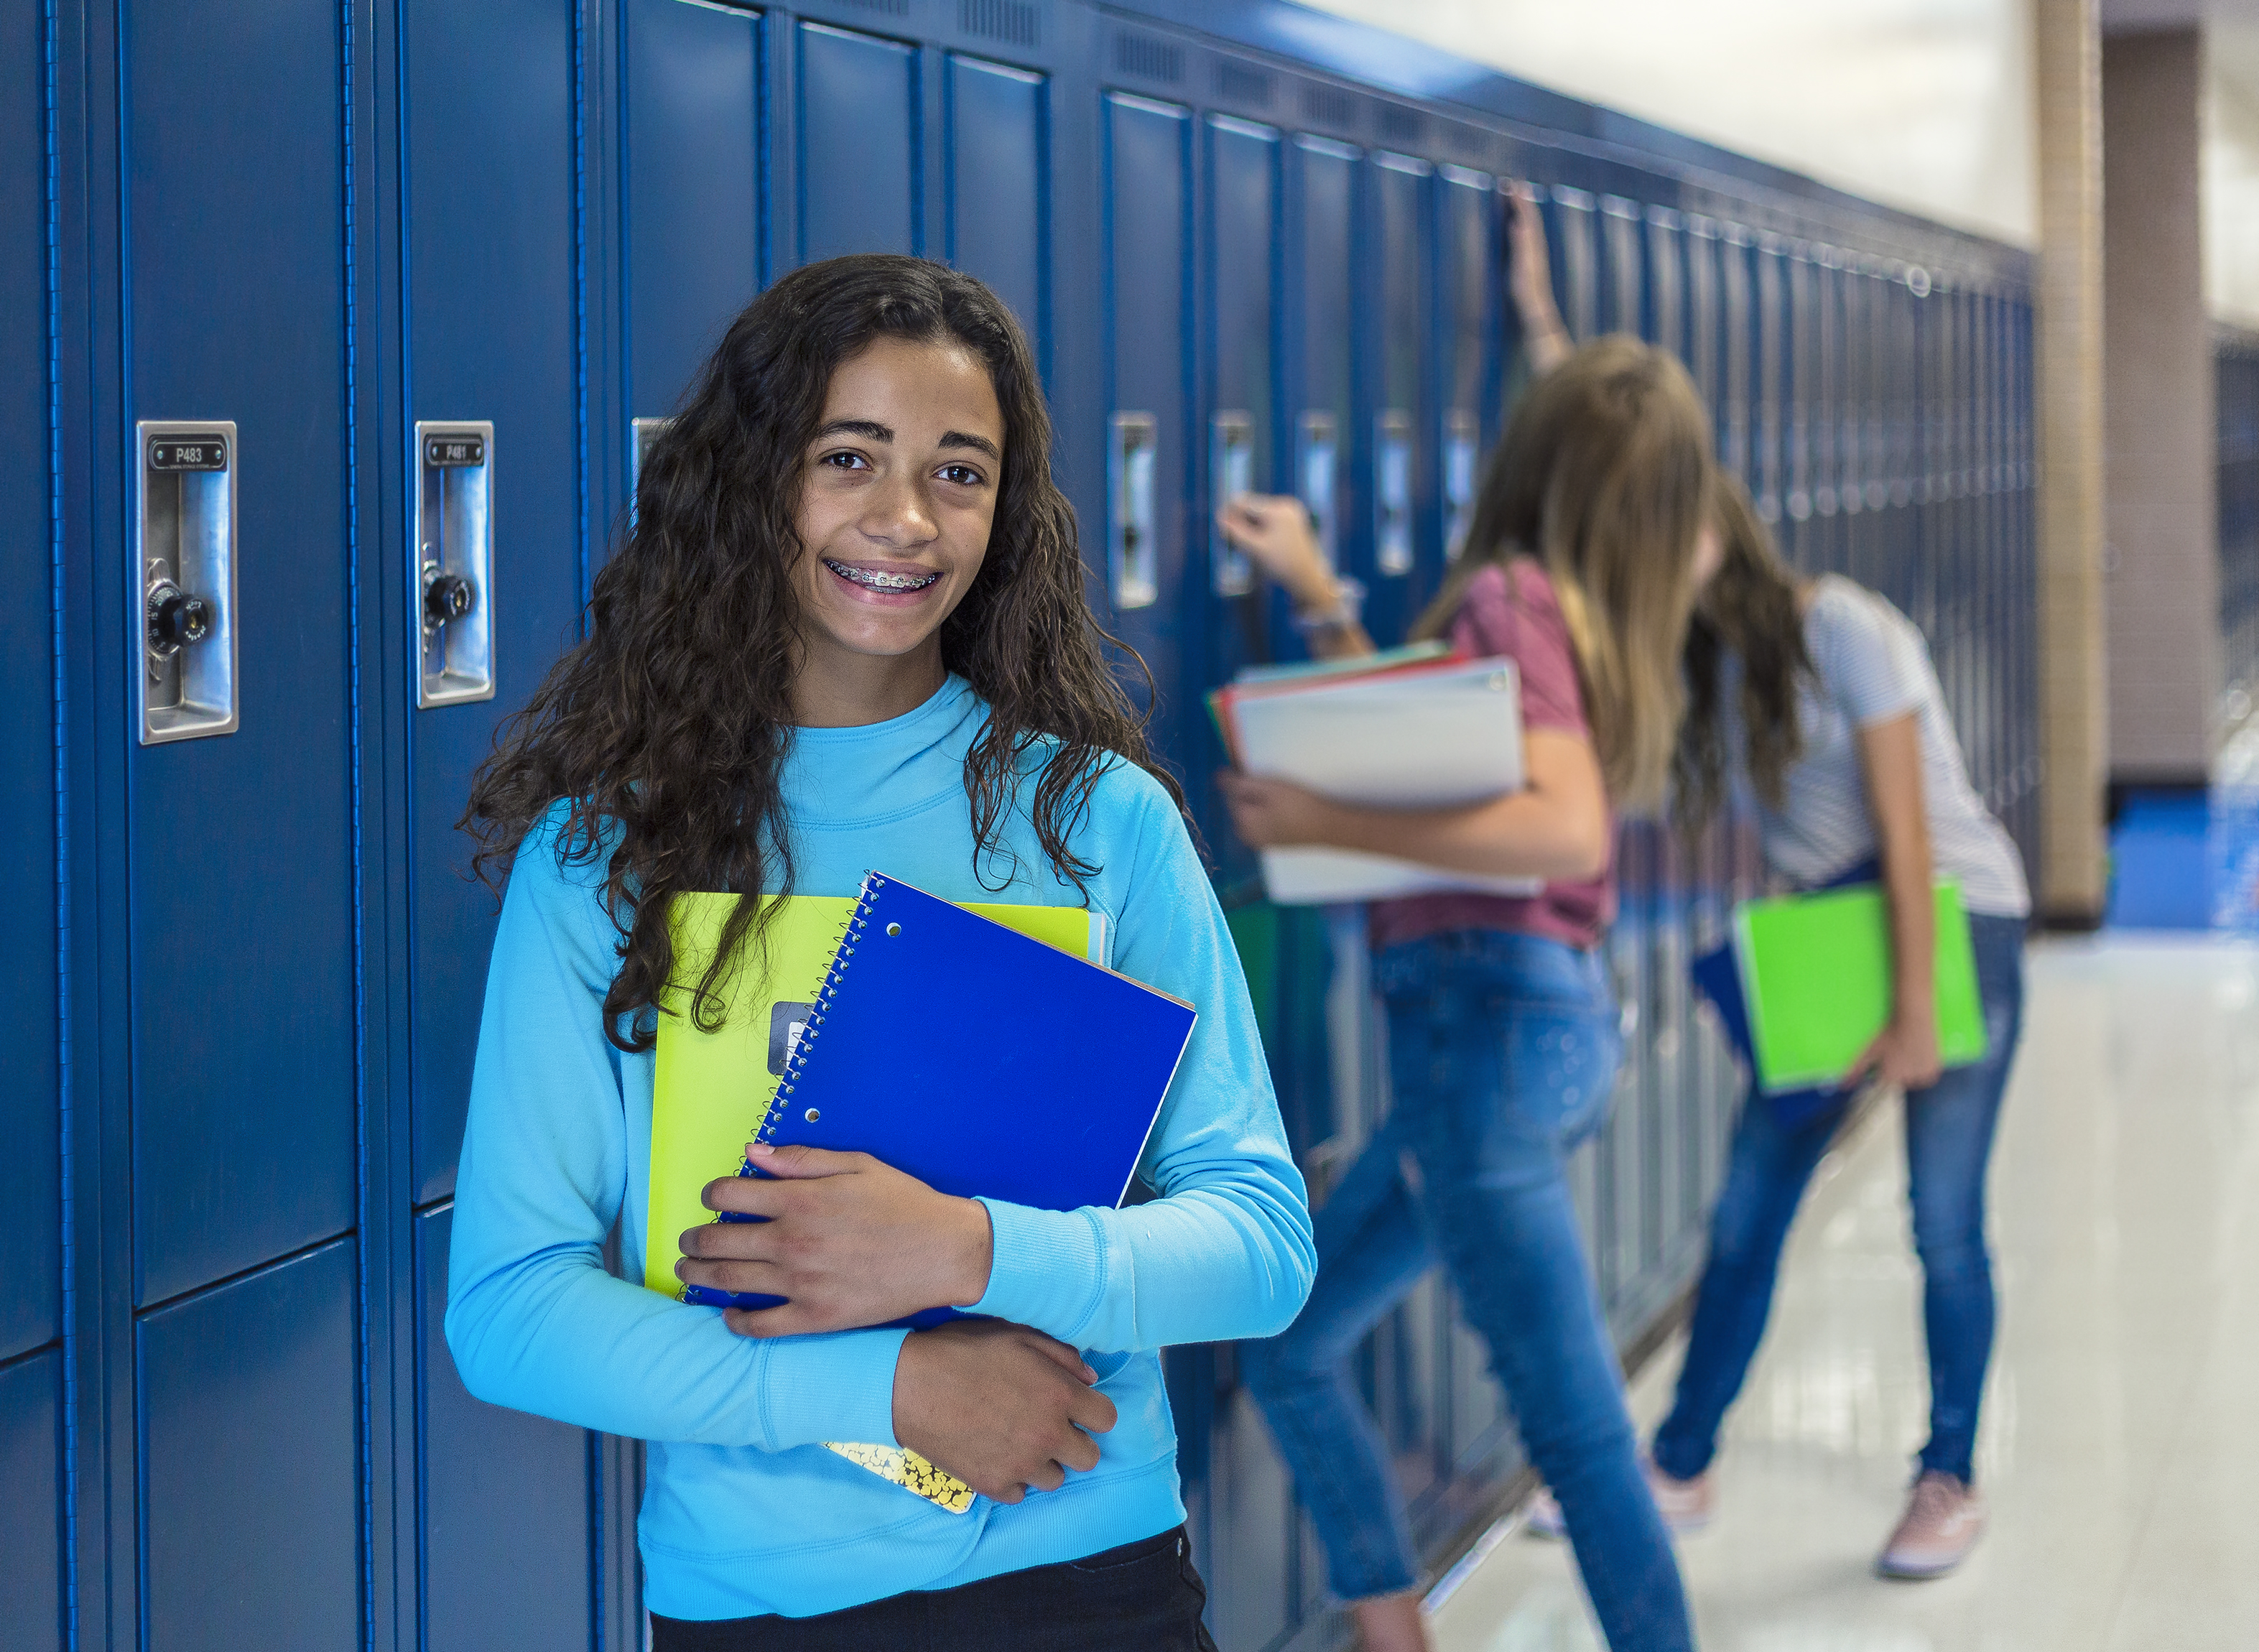 African American female junior high school student portrait, smiling in a school hallway